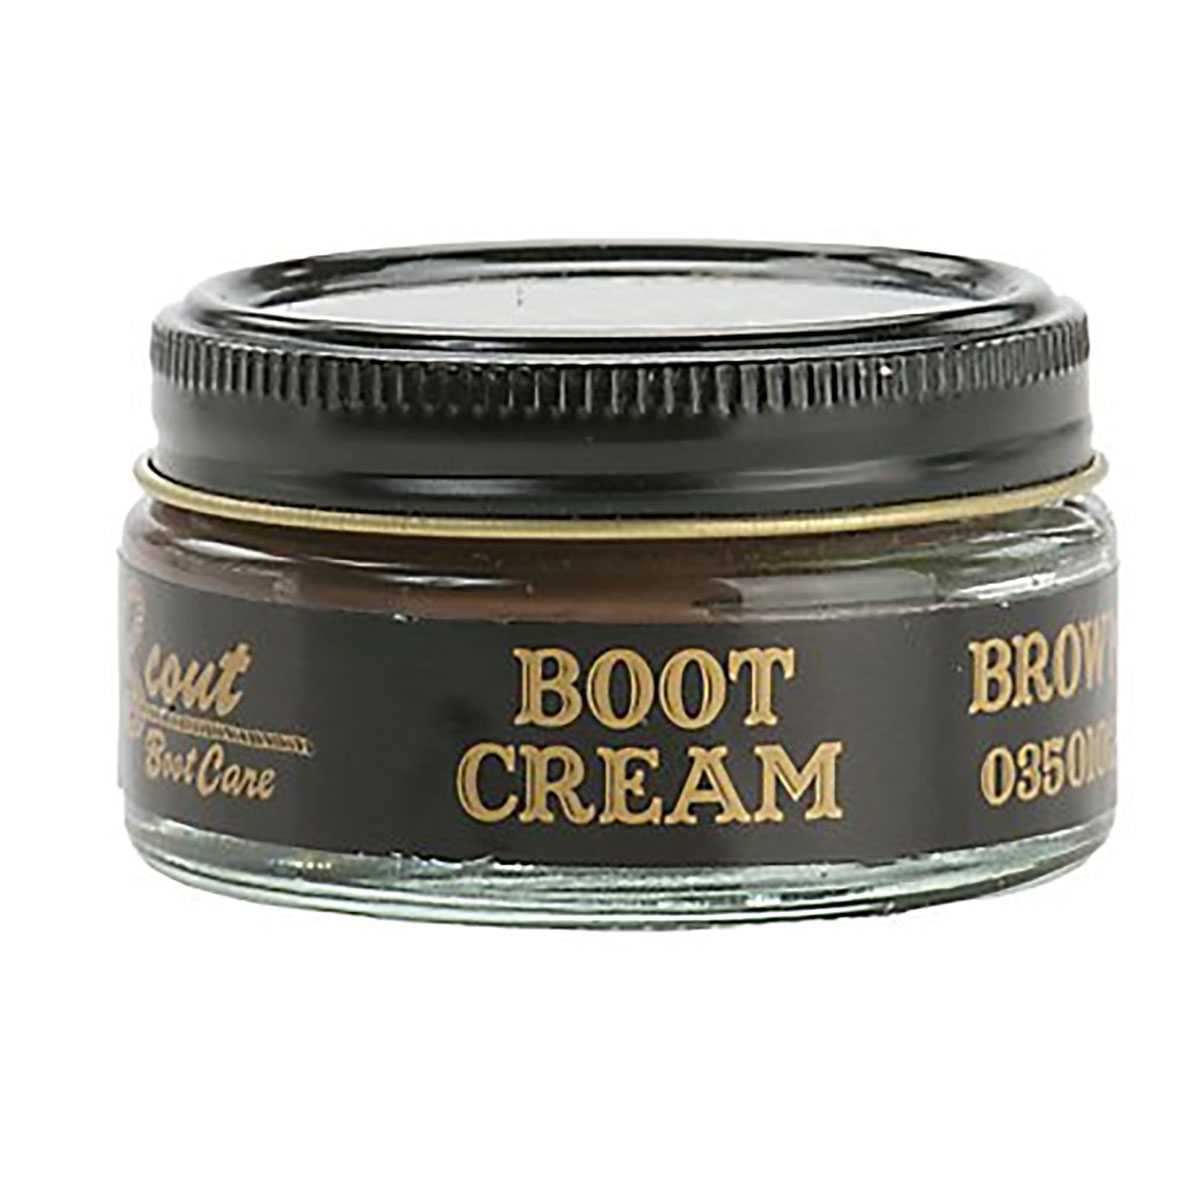 MF-03501 Scout Boot Cream 1.55 oz.